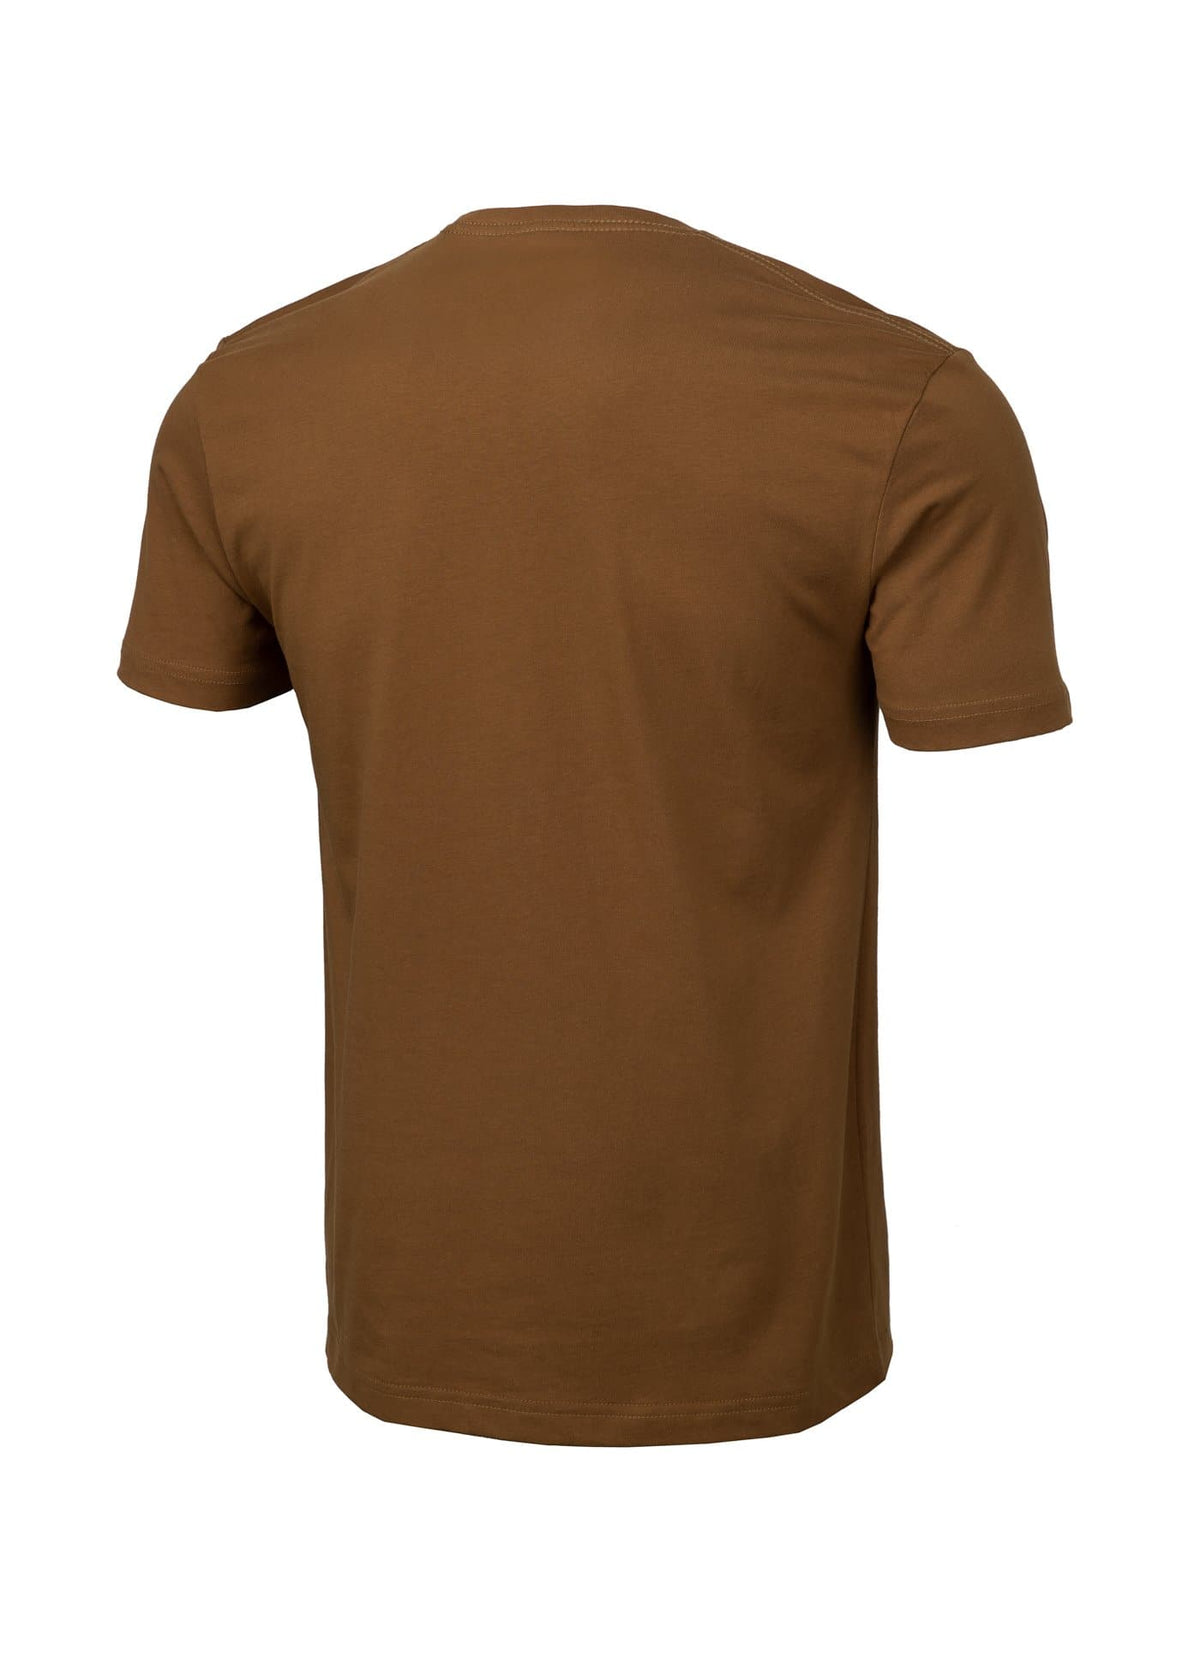 T-Shirt SMALL LOGO 21 Brown - Pitbull West Coast International Store 